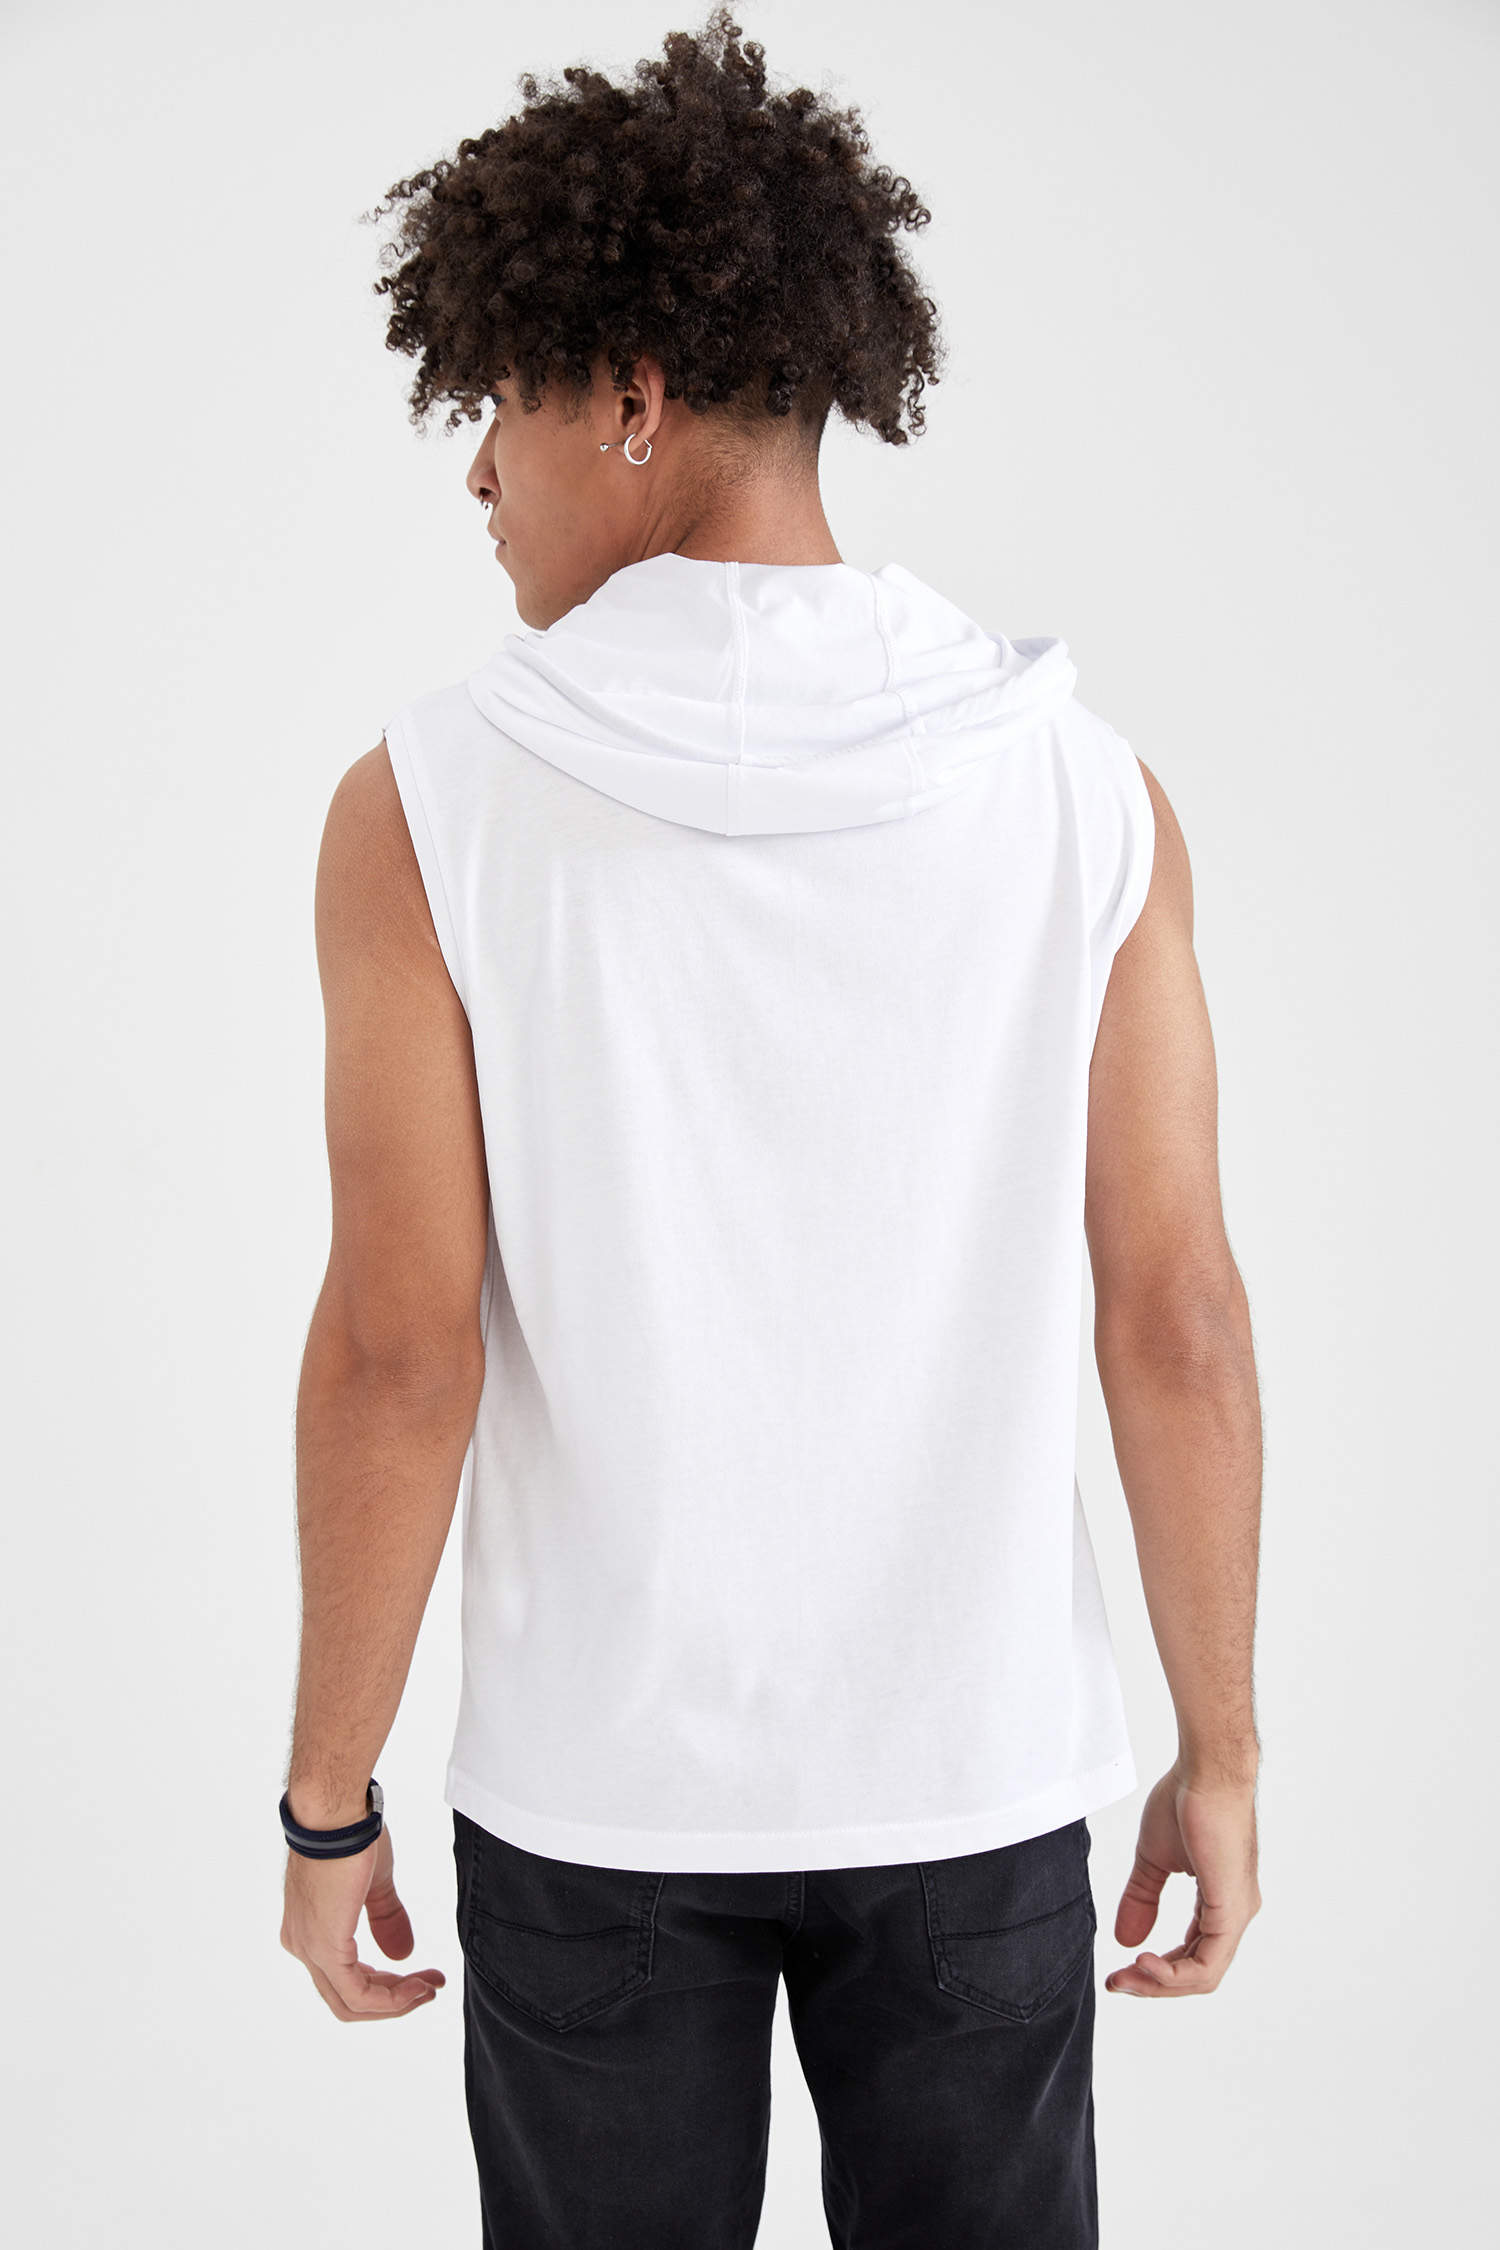 White MAN Standard Fit Licensed Animal Planet Sleeveless Hooded T-Shirt  2010048 | DeFacto